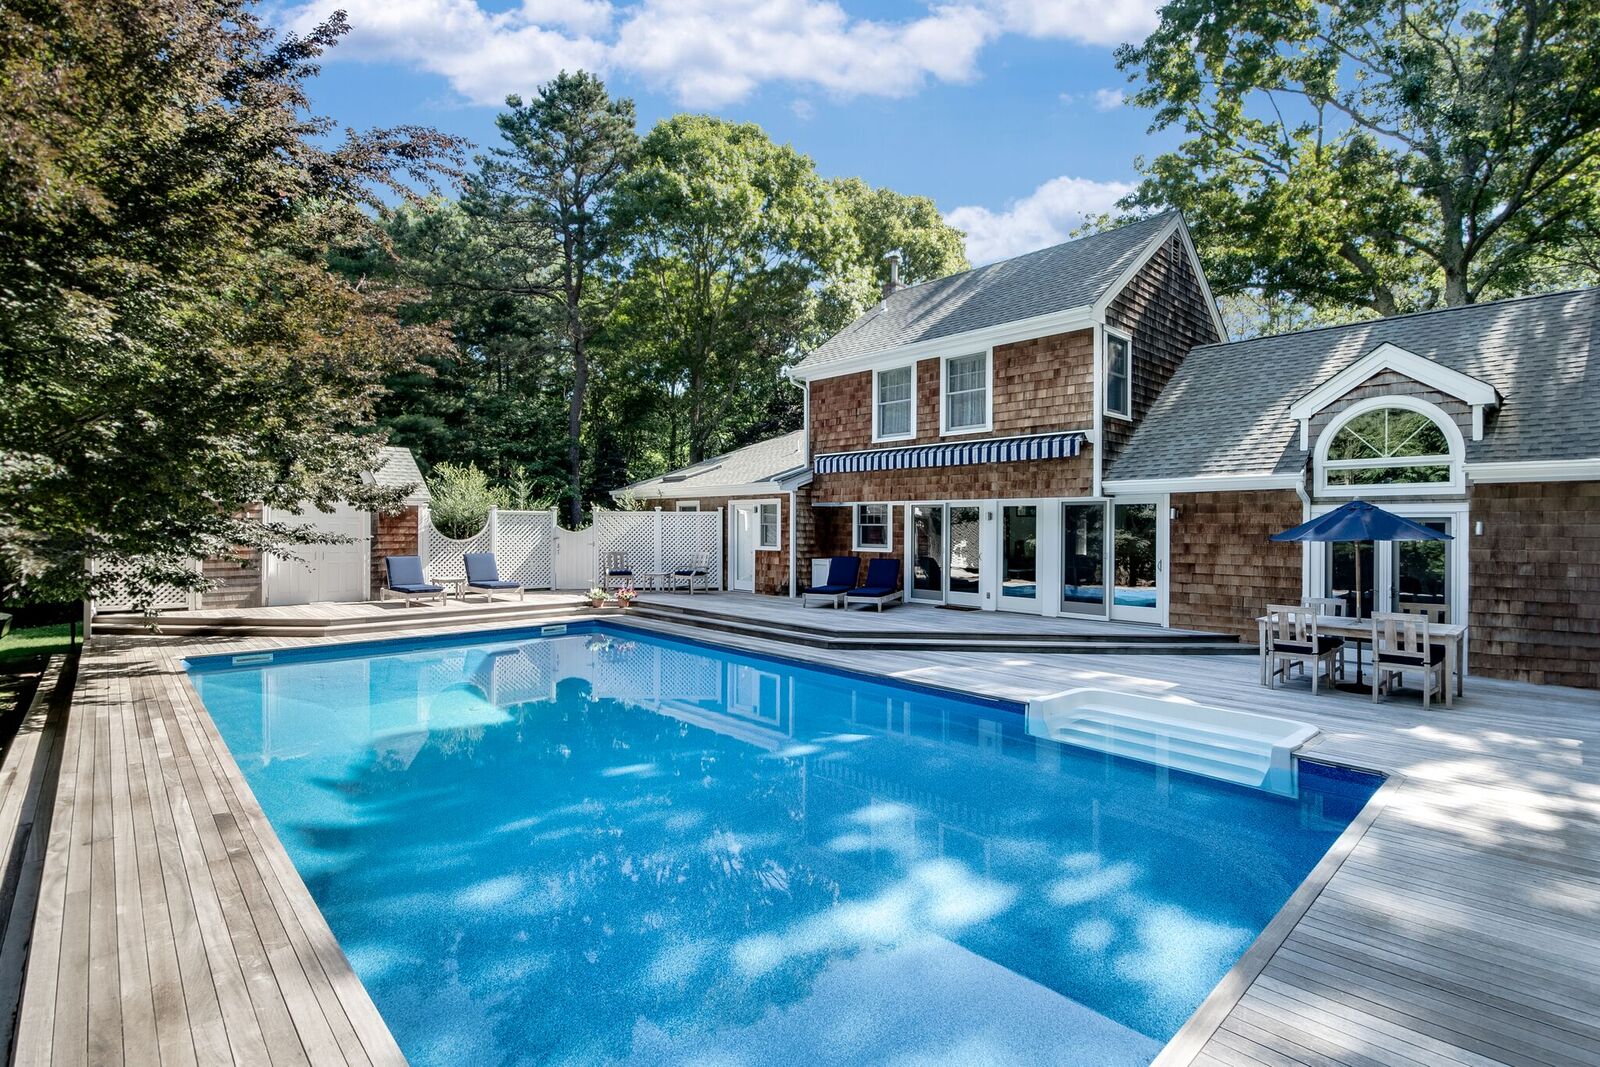 Rental Property at Sagaponack, Sagaponack, Hamptons, NY - Bedrooms: 4 
Bathrooms: 3  - $60,000 MO.